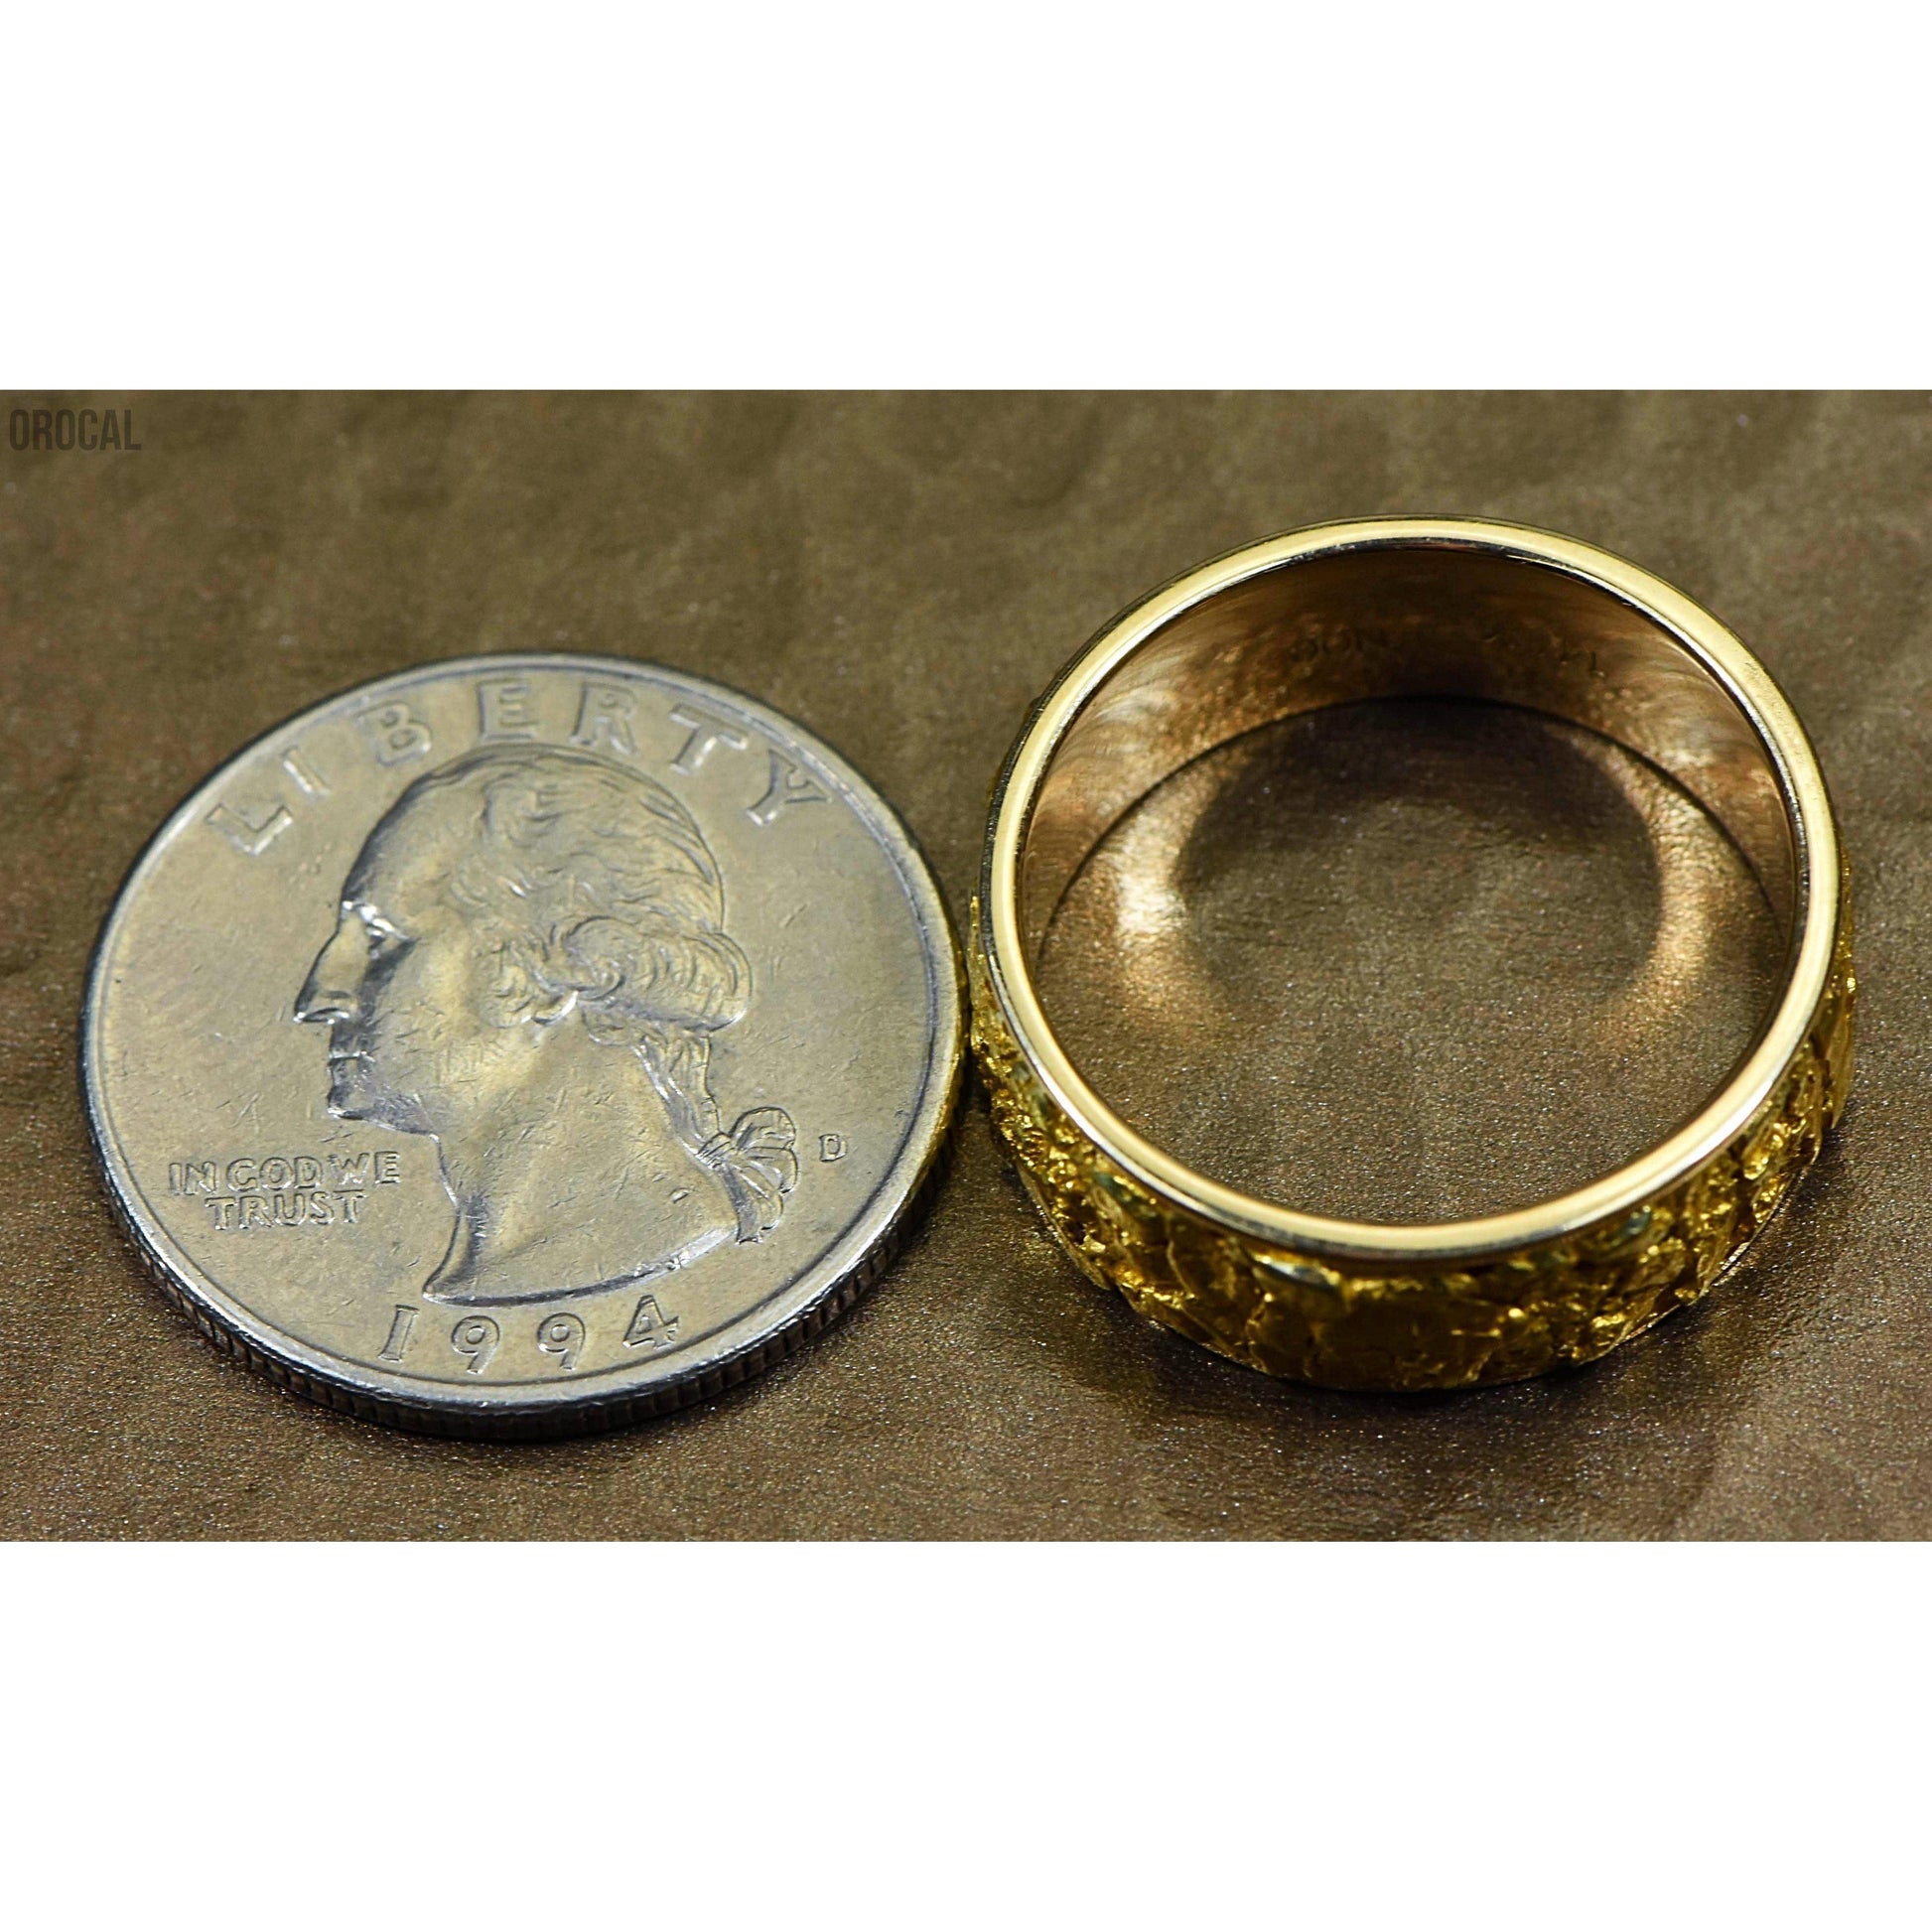 Orocal Gold Nugget Men's Ring RM8MM-Destination Gold Detectors